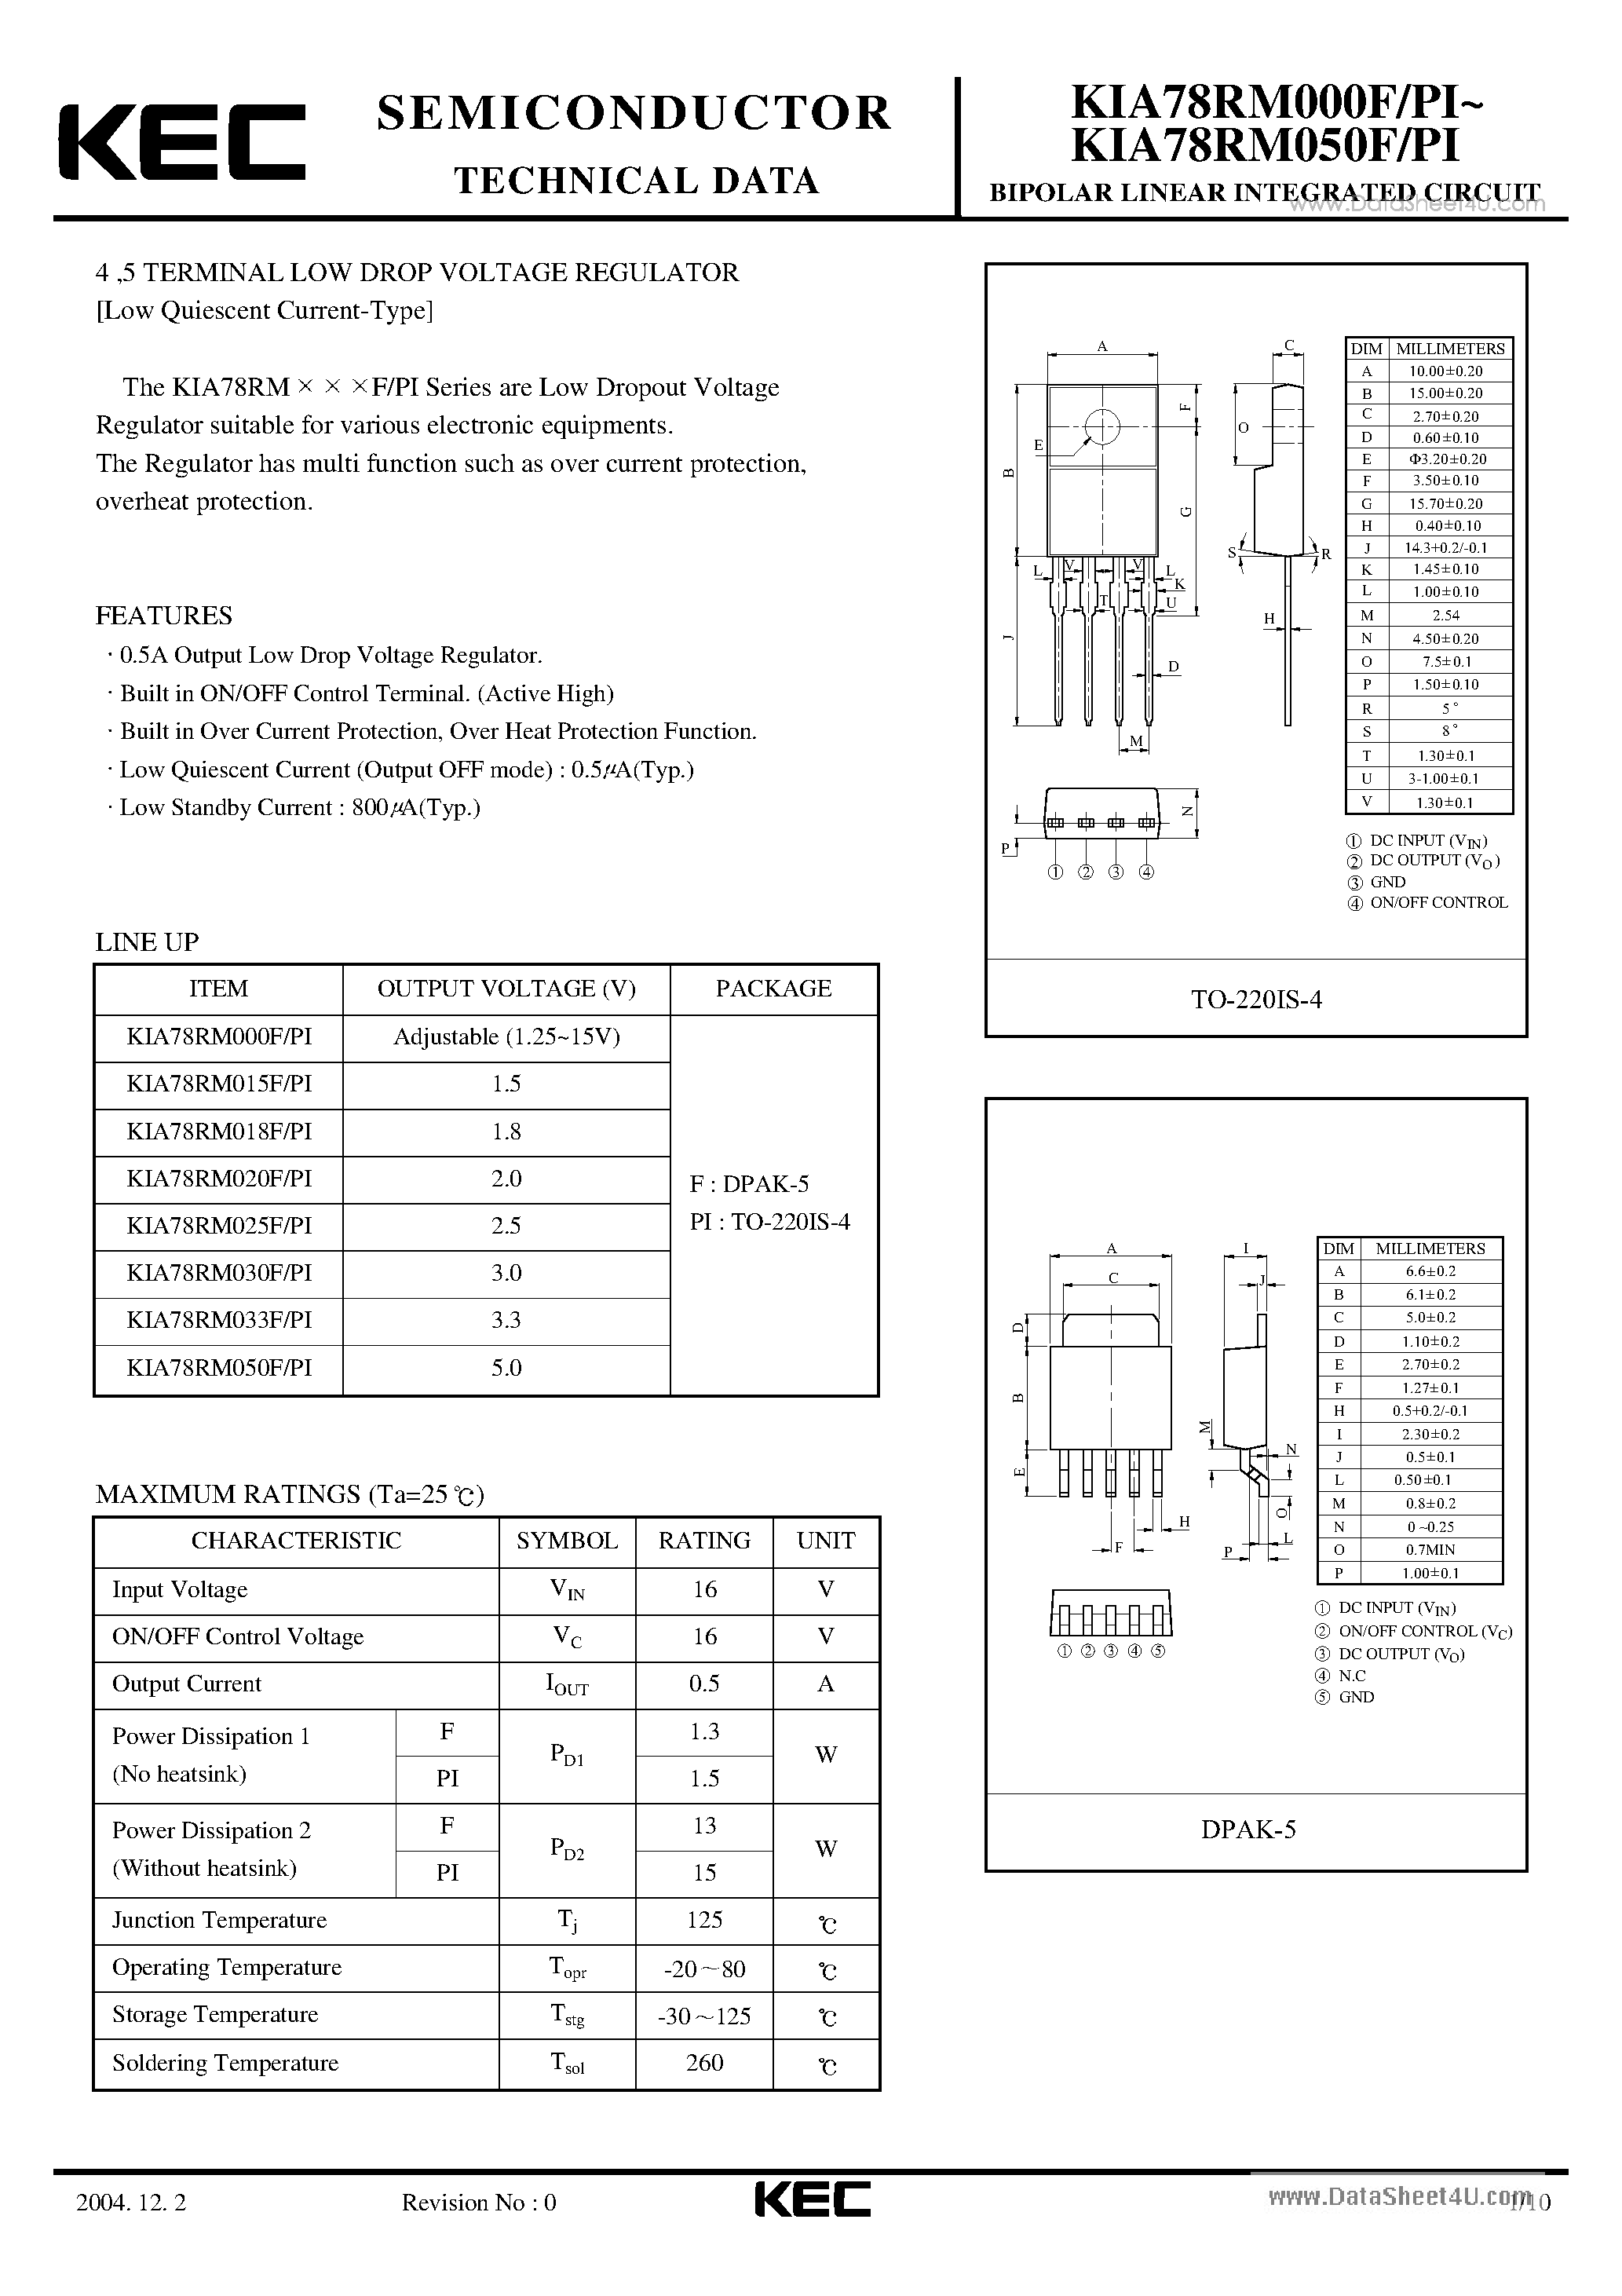 Datasheet KIA78RM000F - TERMINAL LOW DROP VOLTAGE REGULATOR page 1